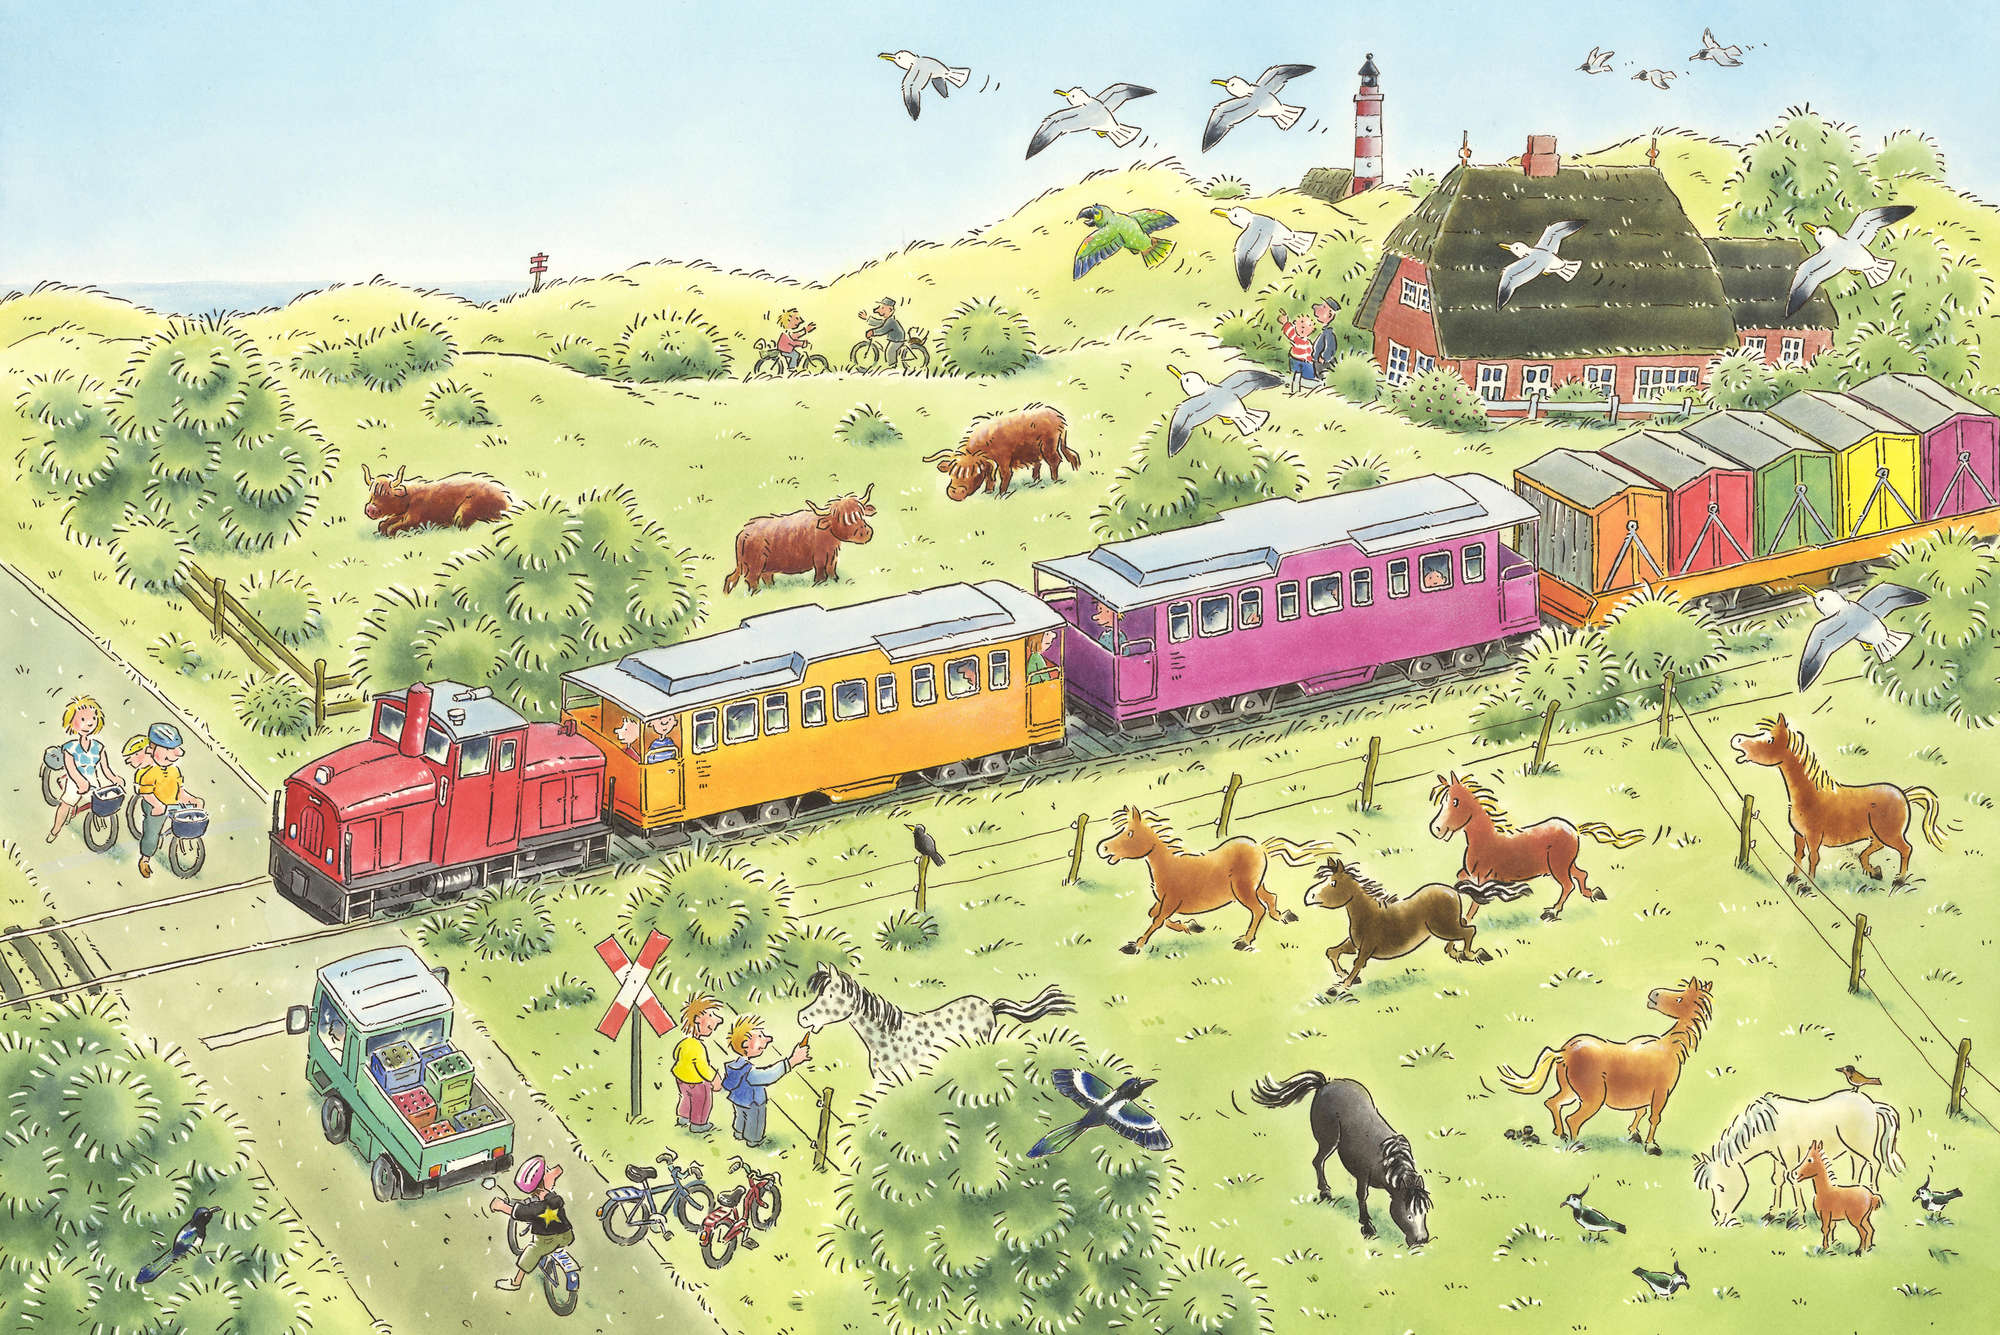             Papel pintado infantil Cruce de ferrocarril con tren y animales sobre vellón texturizado
        